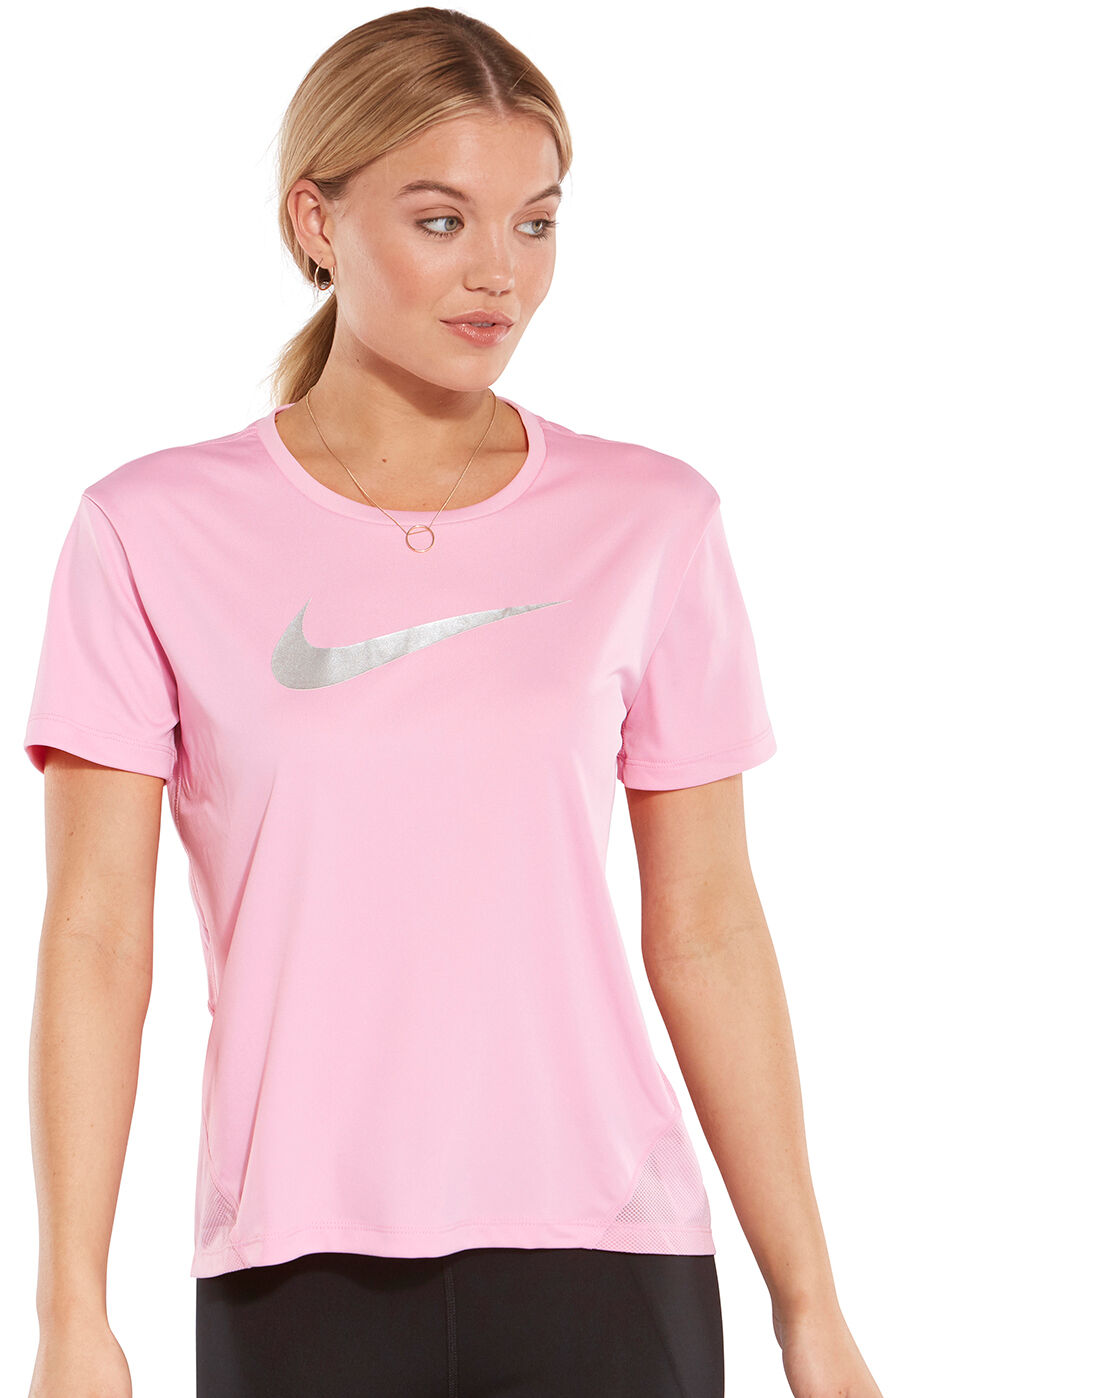 Women's Pink Nike Running T-Shirt 